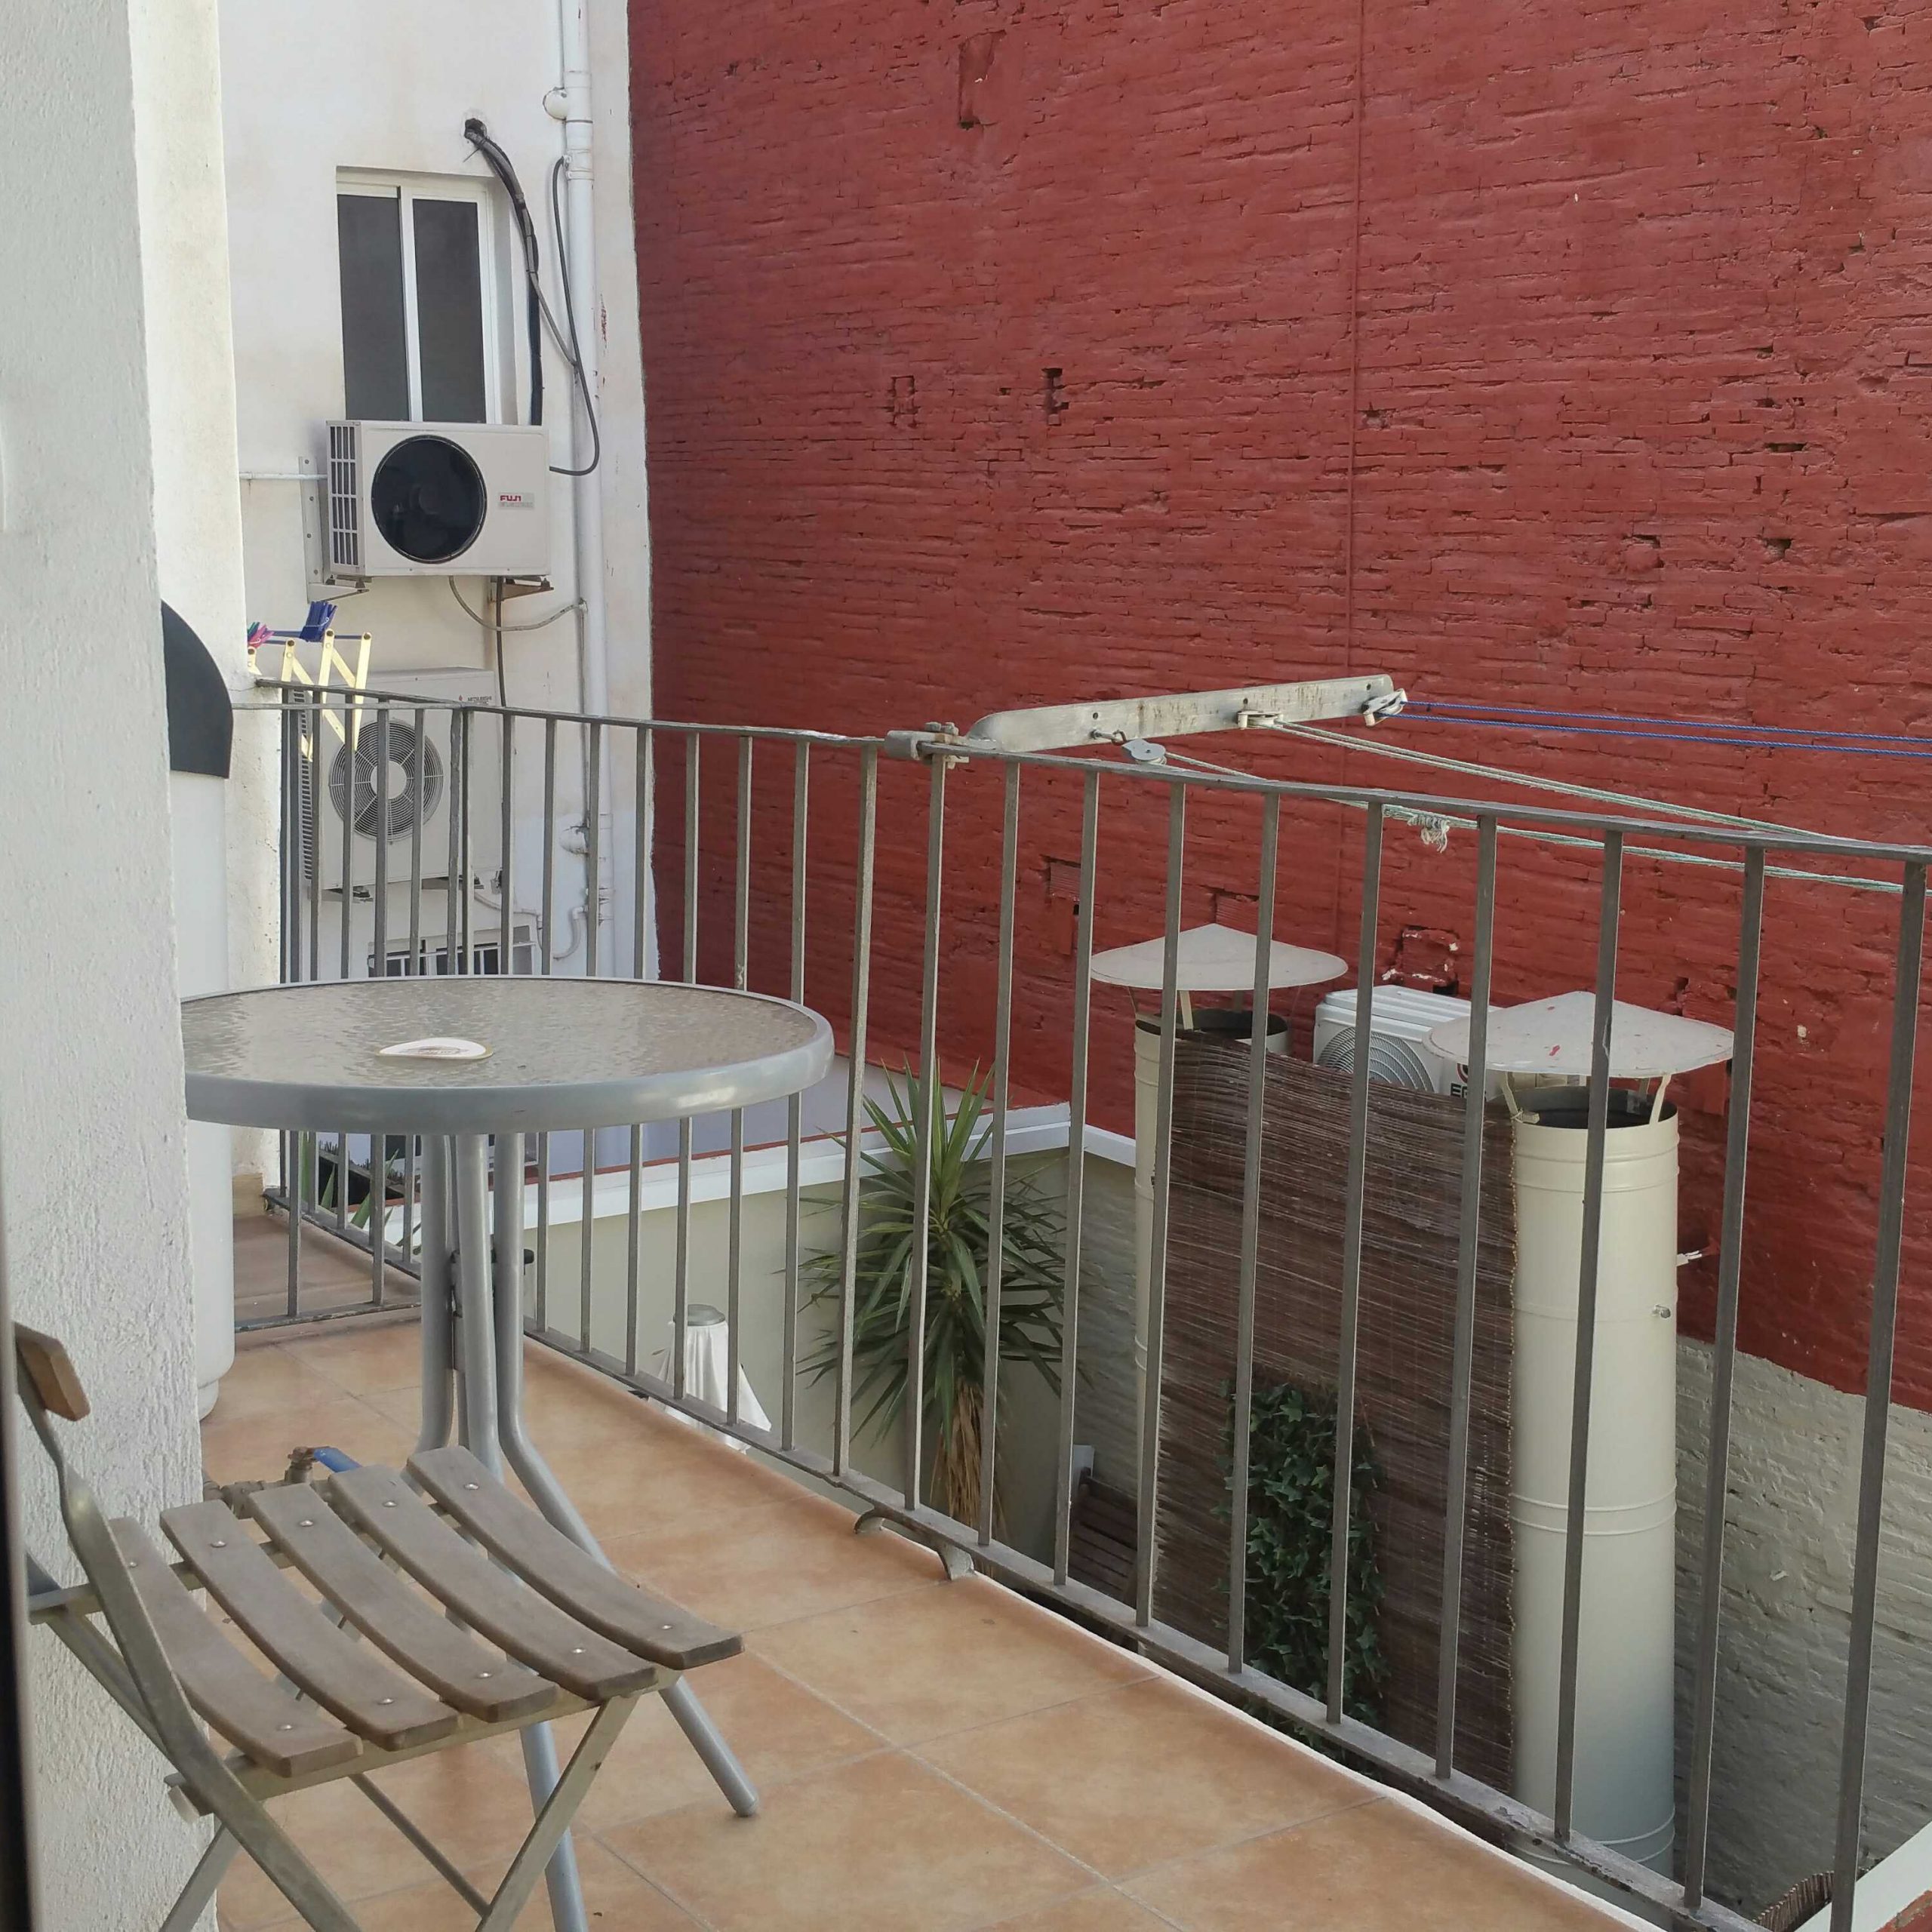 Pelayo32 - Beautiful apartment for digital nomads in Valencia